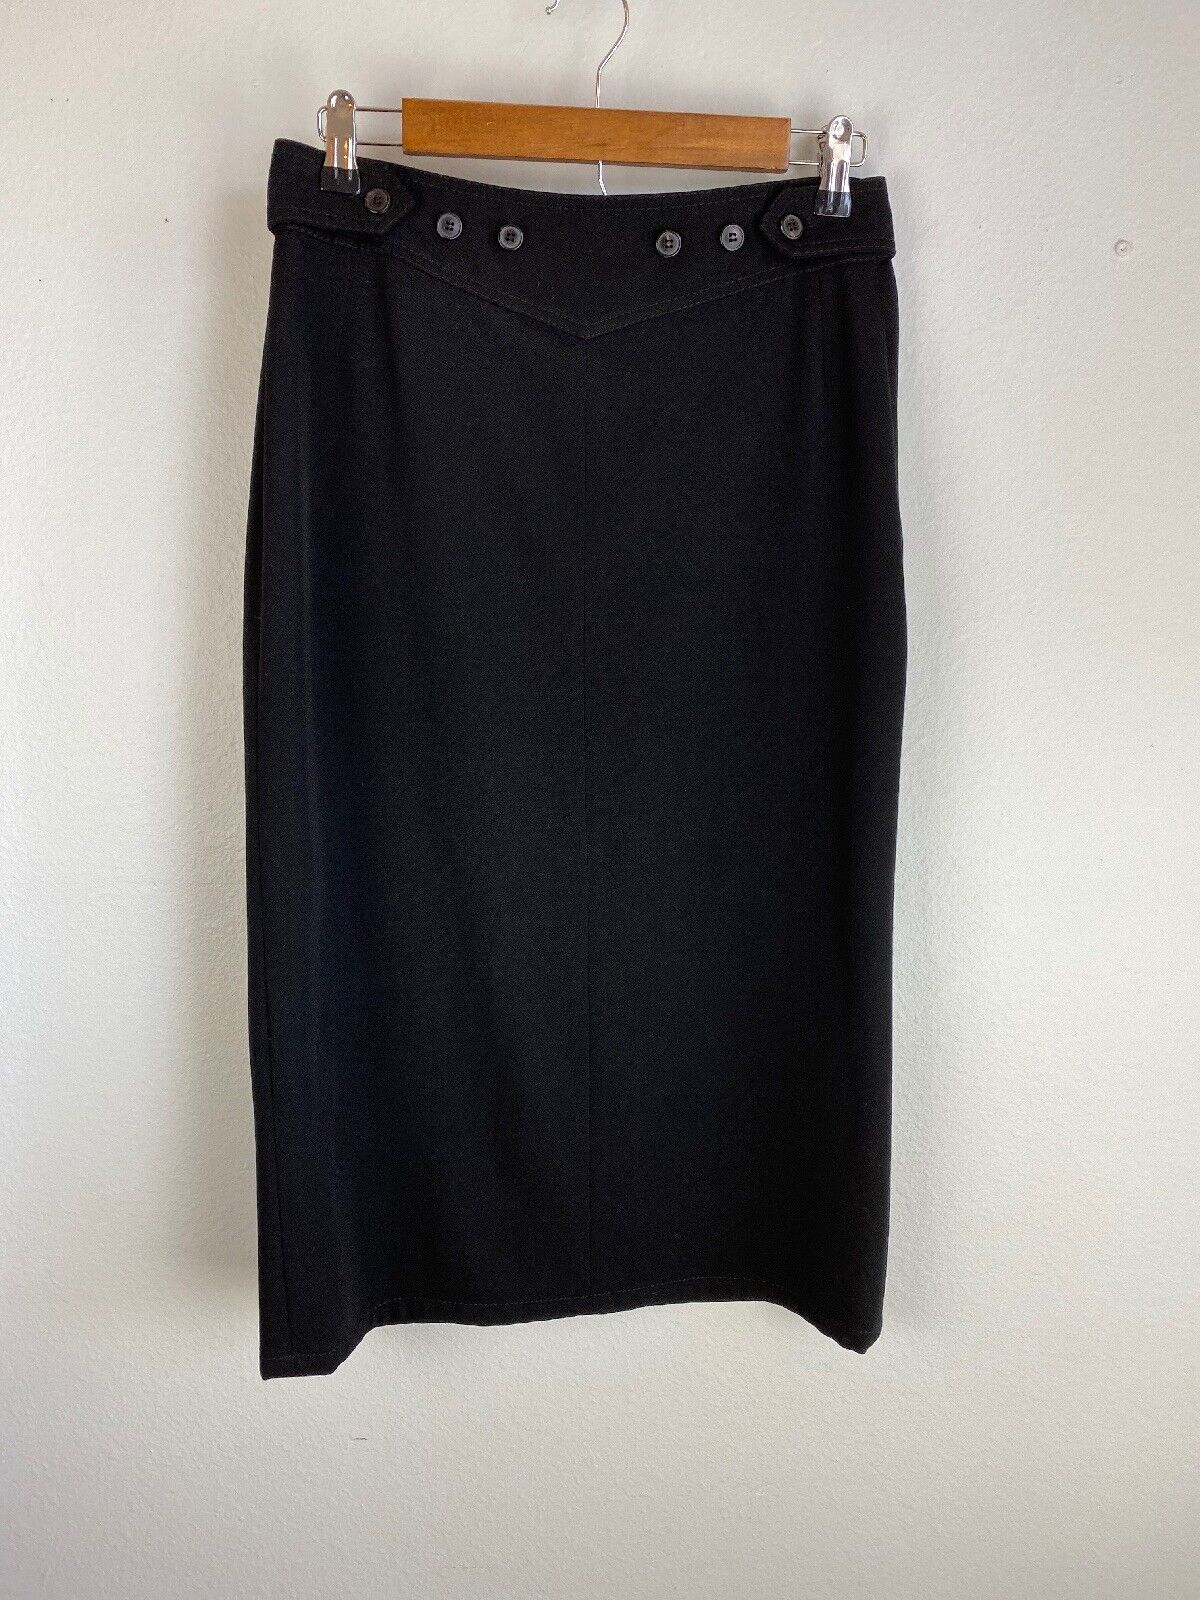 Dries Van Noten Womens Pencil Skirt 38 4 S Midi Black Wool Lined Button Detail